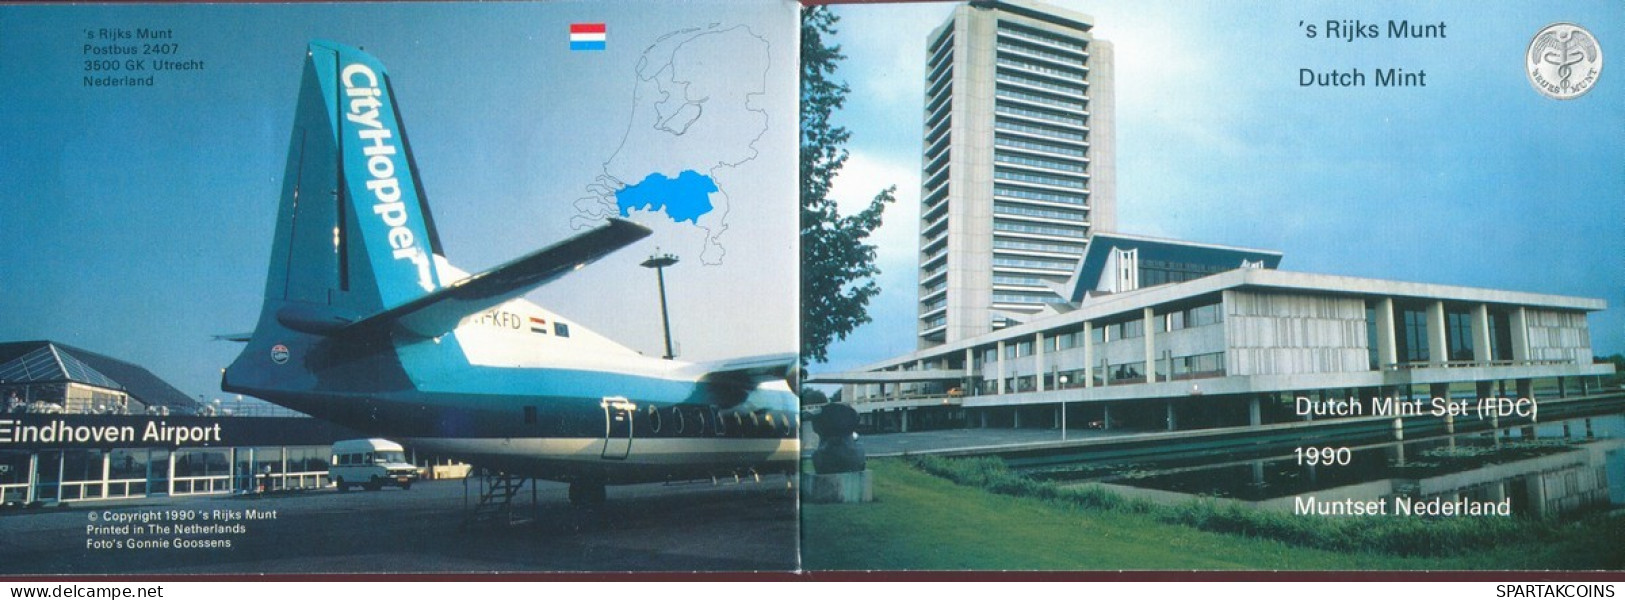 NEERLANDÉS NETHERLANDS 1990 MINT SET 6 Moneda + MEDAL #SET1109.7.E.A - Mint Sets & Proof Sets